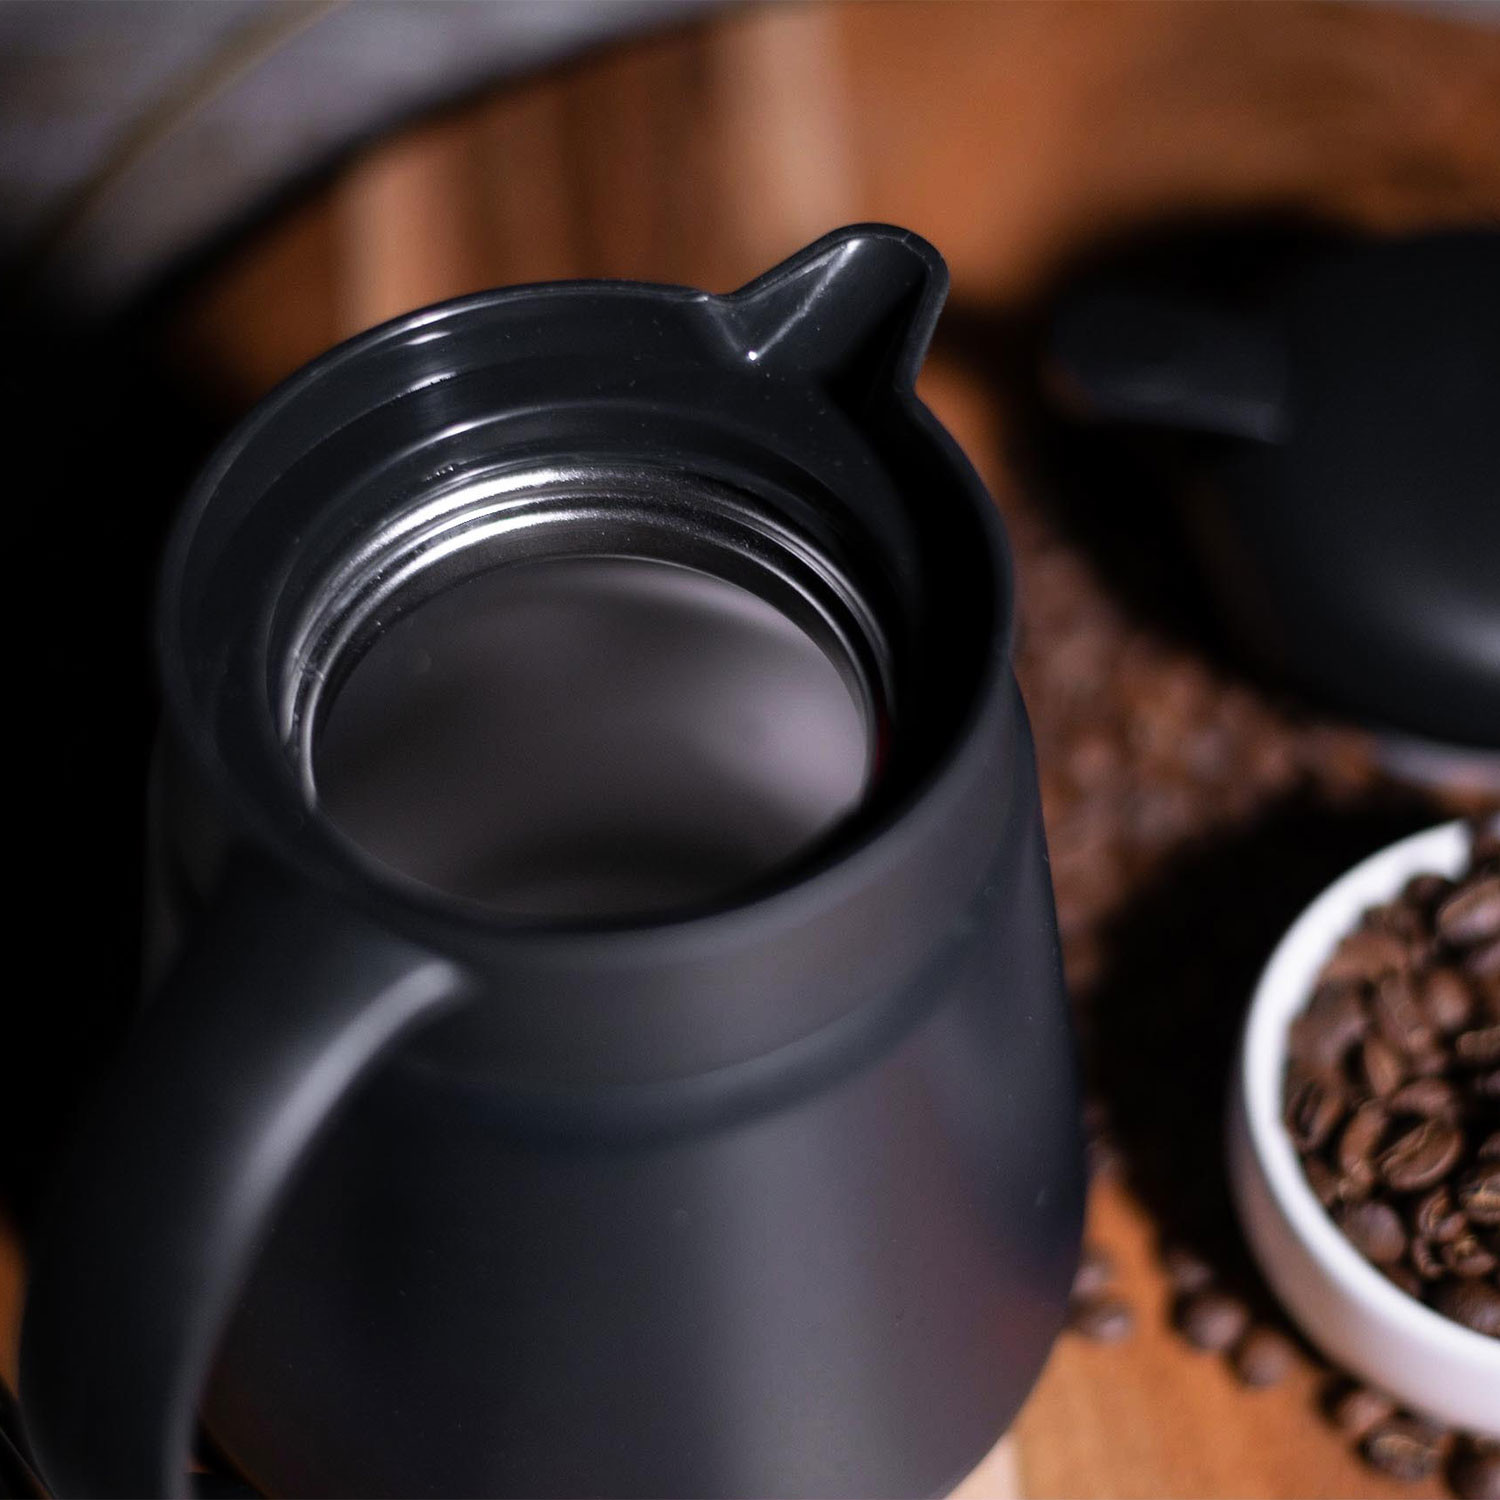 Lafeeca Thermal Coffee Carafe - Beverages Dispenser - Tea Pot Water Pitcher  - 1500 ml Black